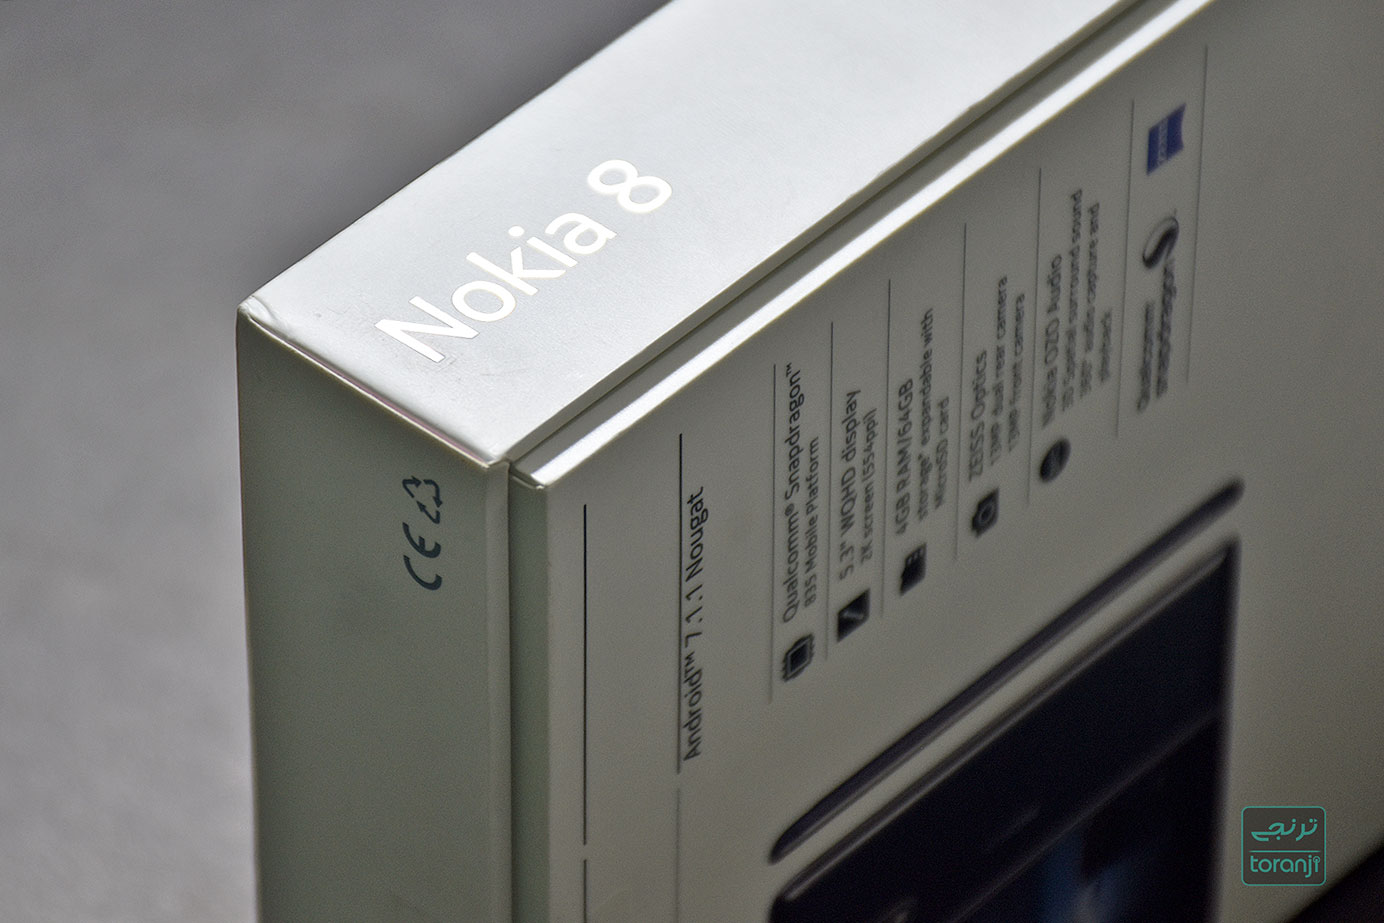 تماشا کنید: آنباکسینگ نوکیا 8 (Nokia 8)